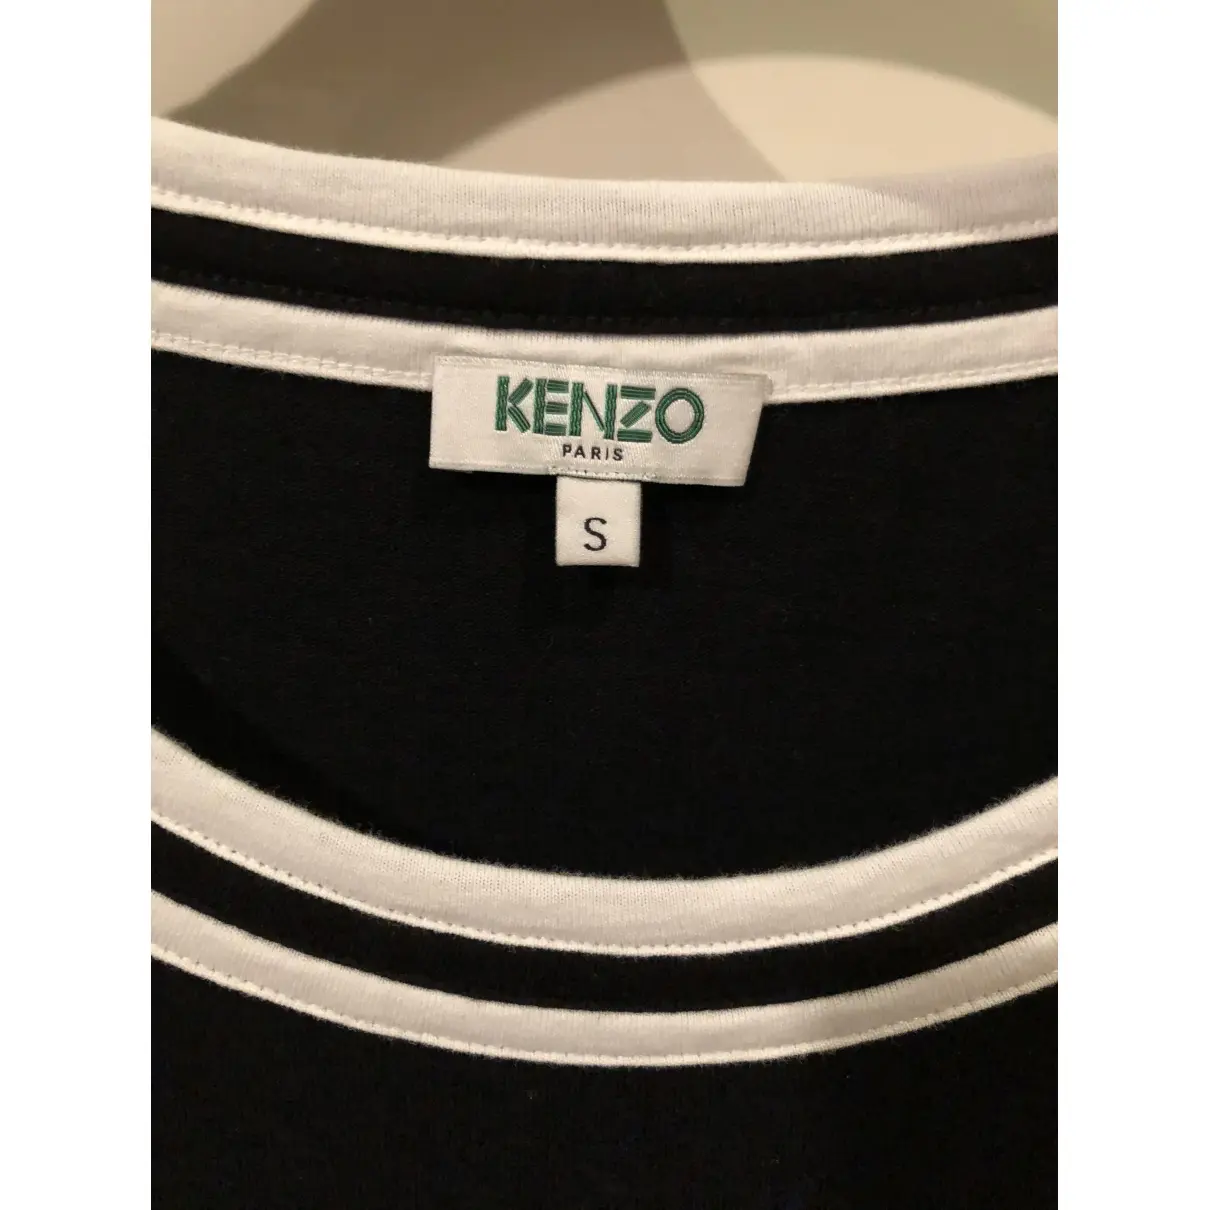 Kenzo Maxi dress for sale